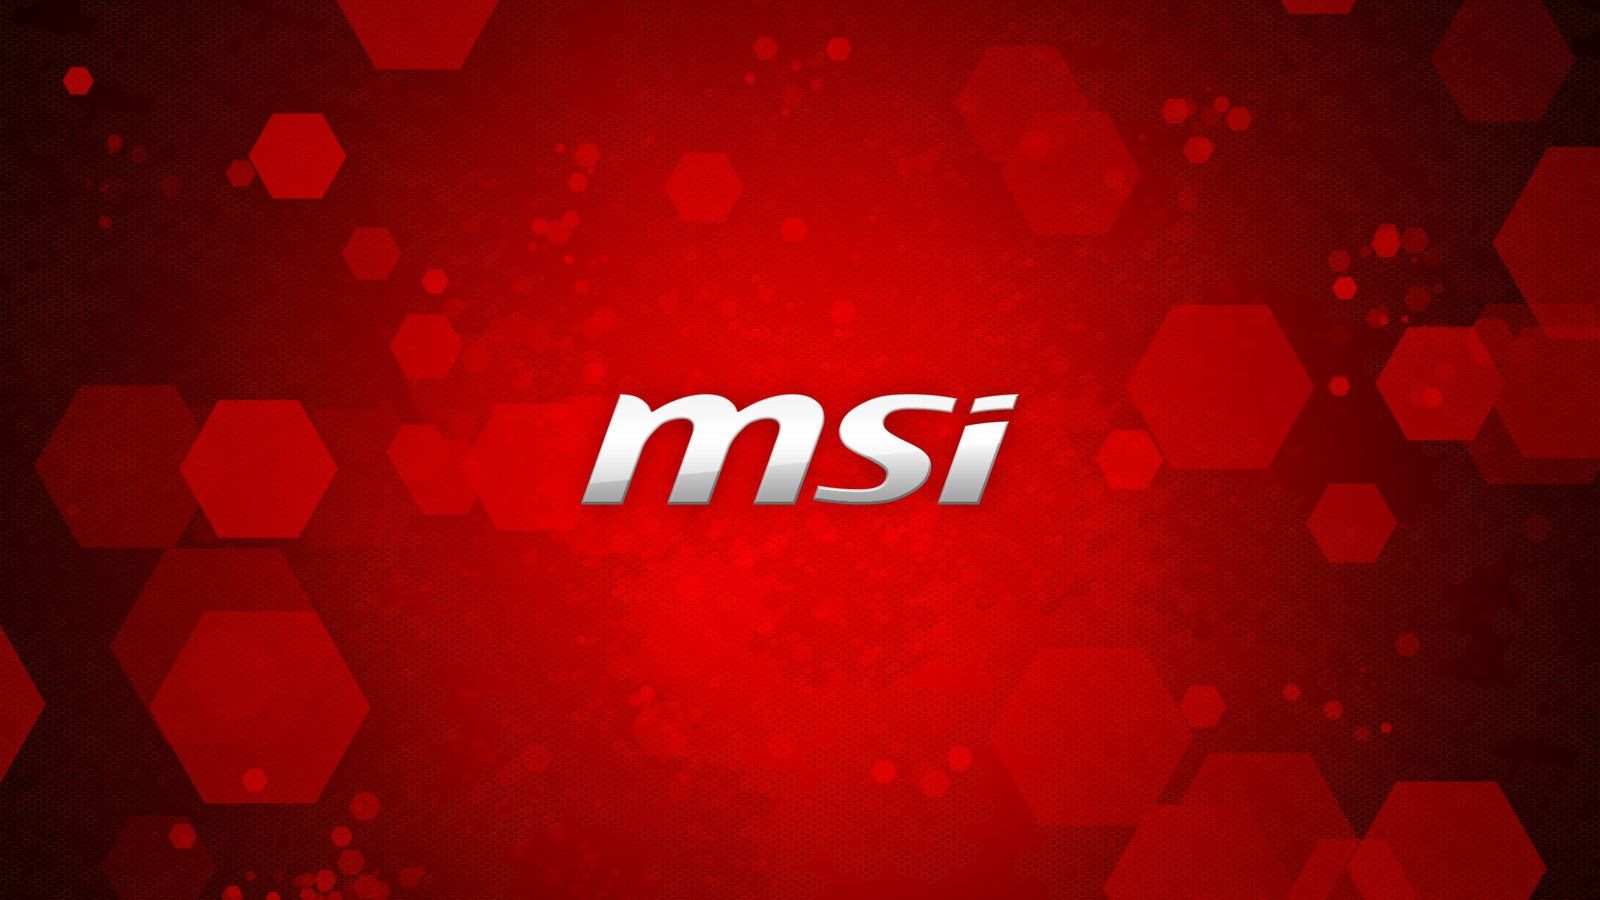 Msi Desktop Background